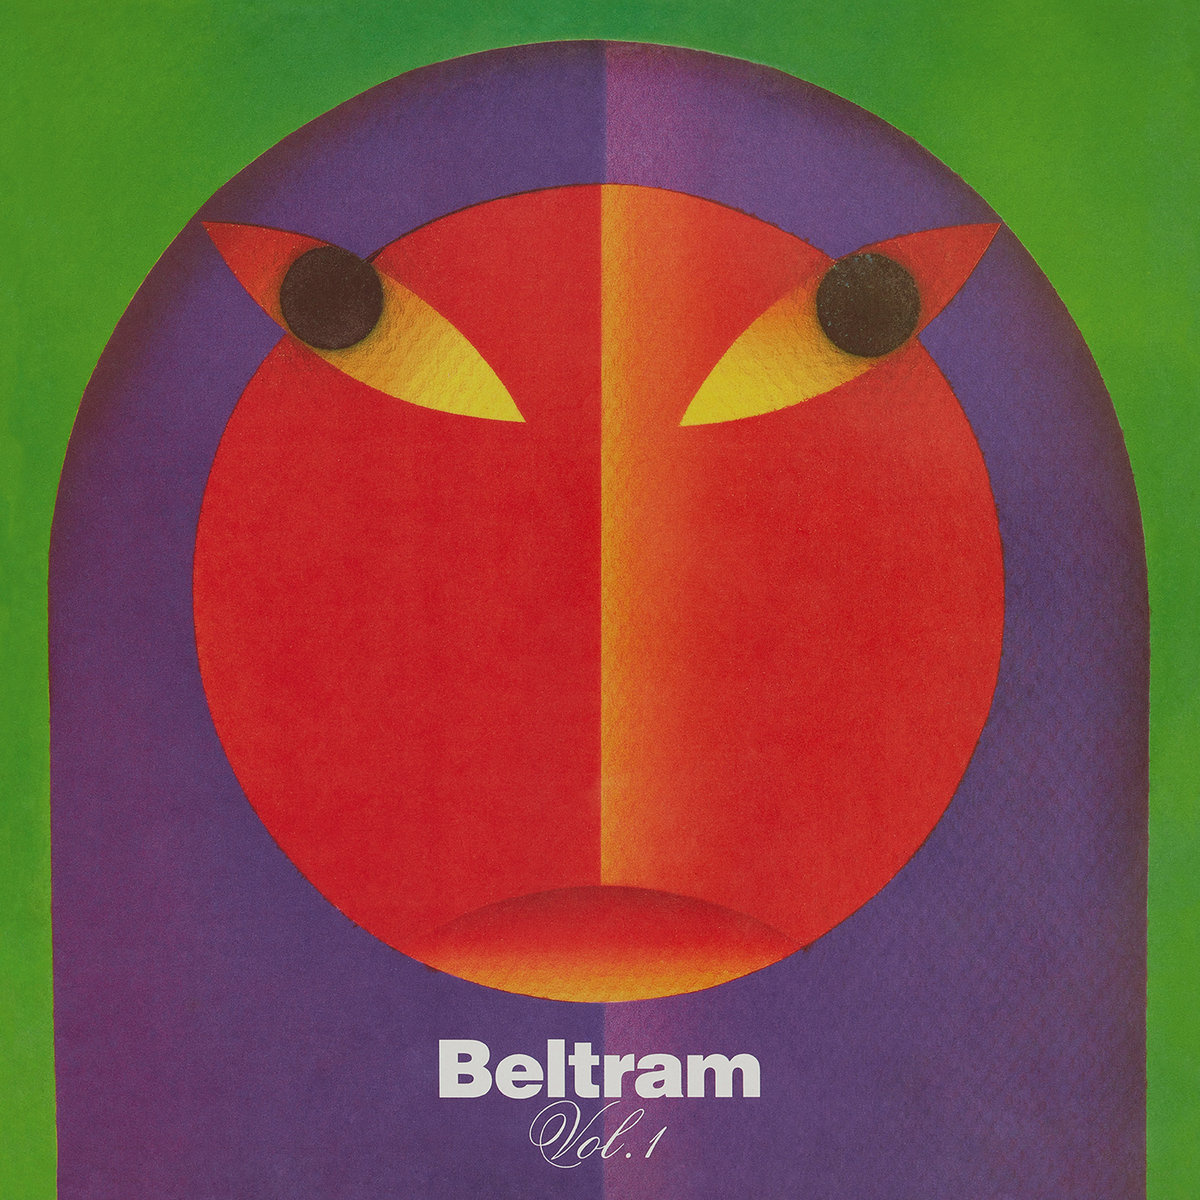 Joey Beltram - Beltram Vol. 1 vinyl cover